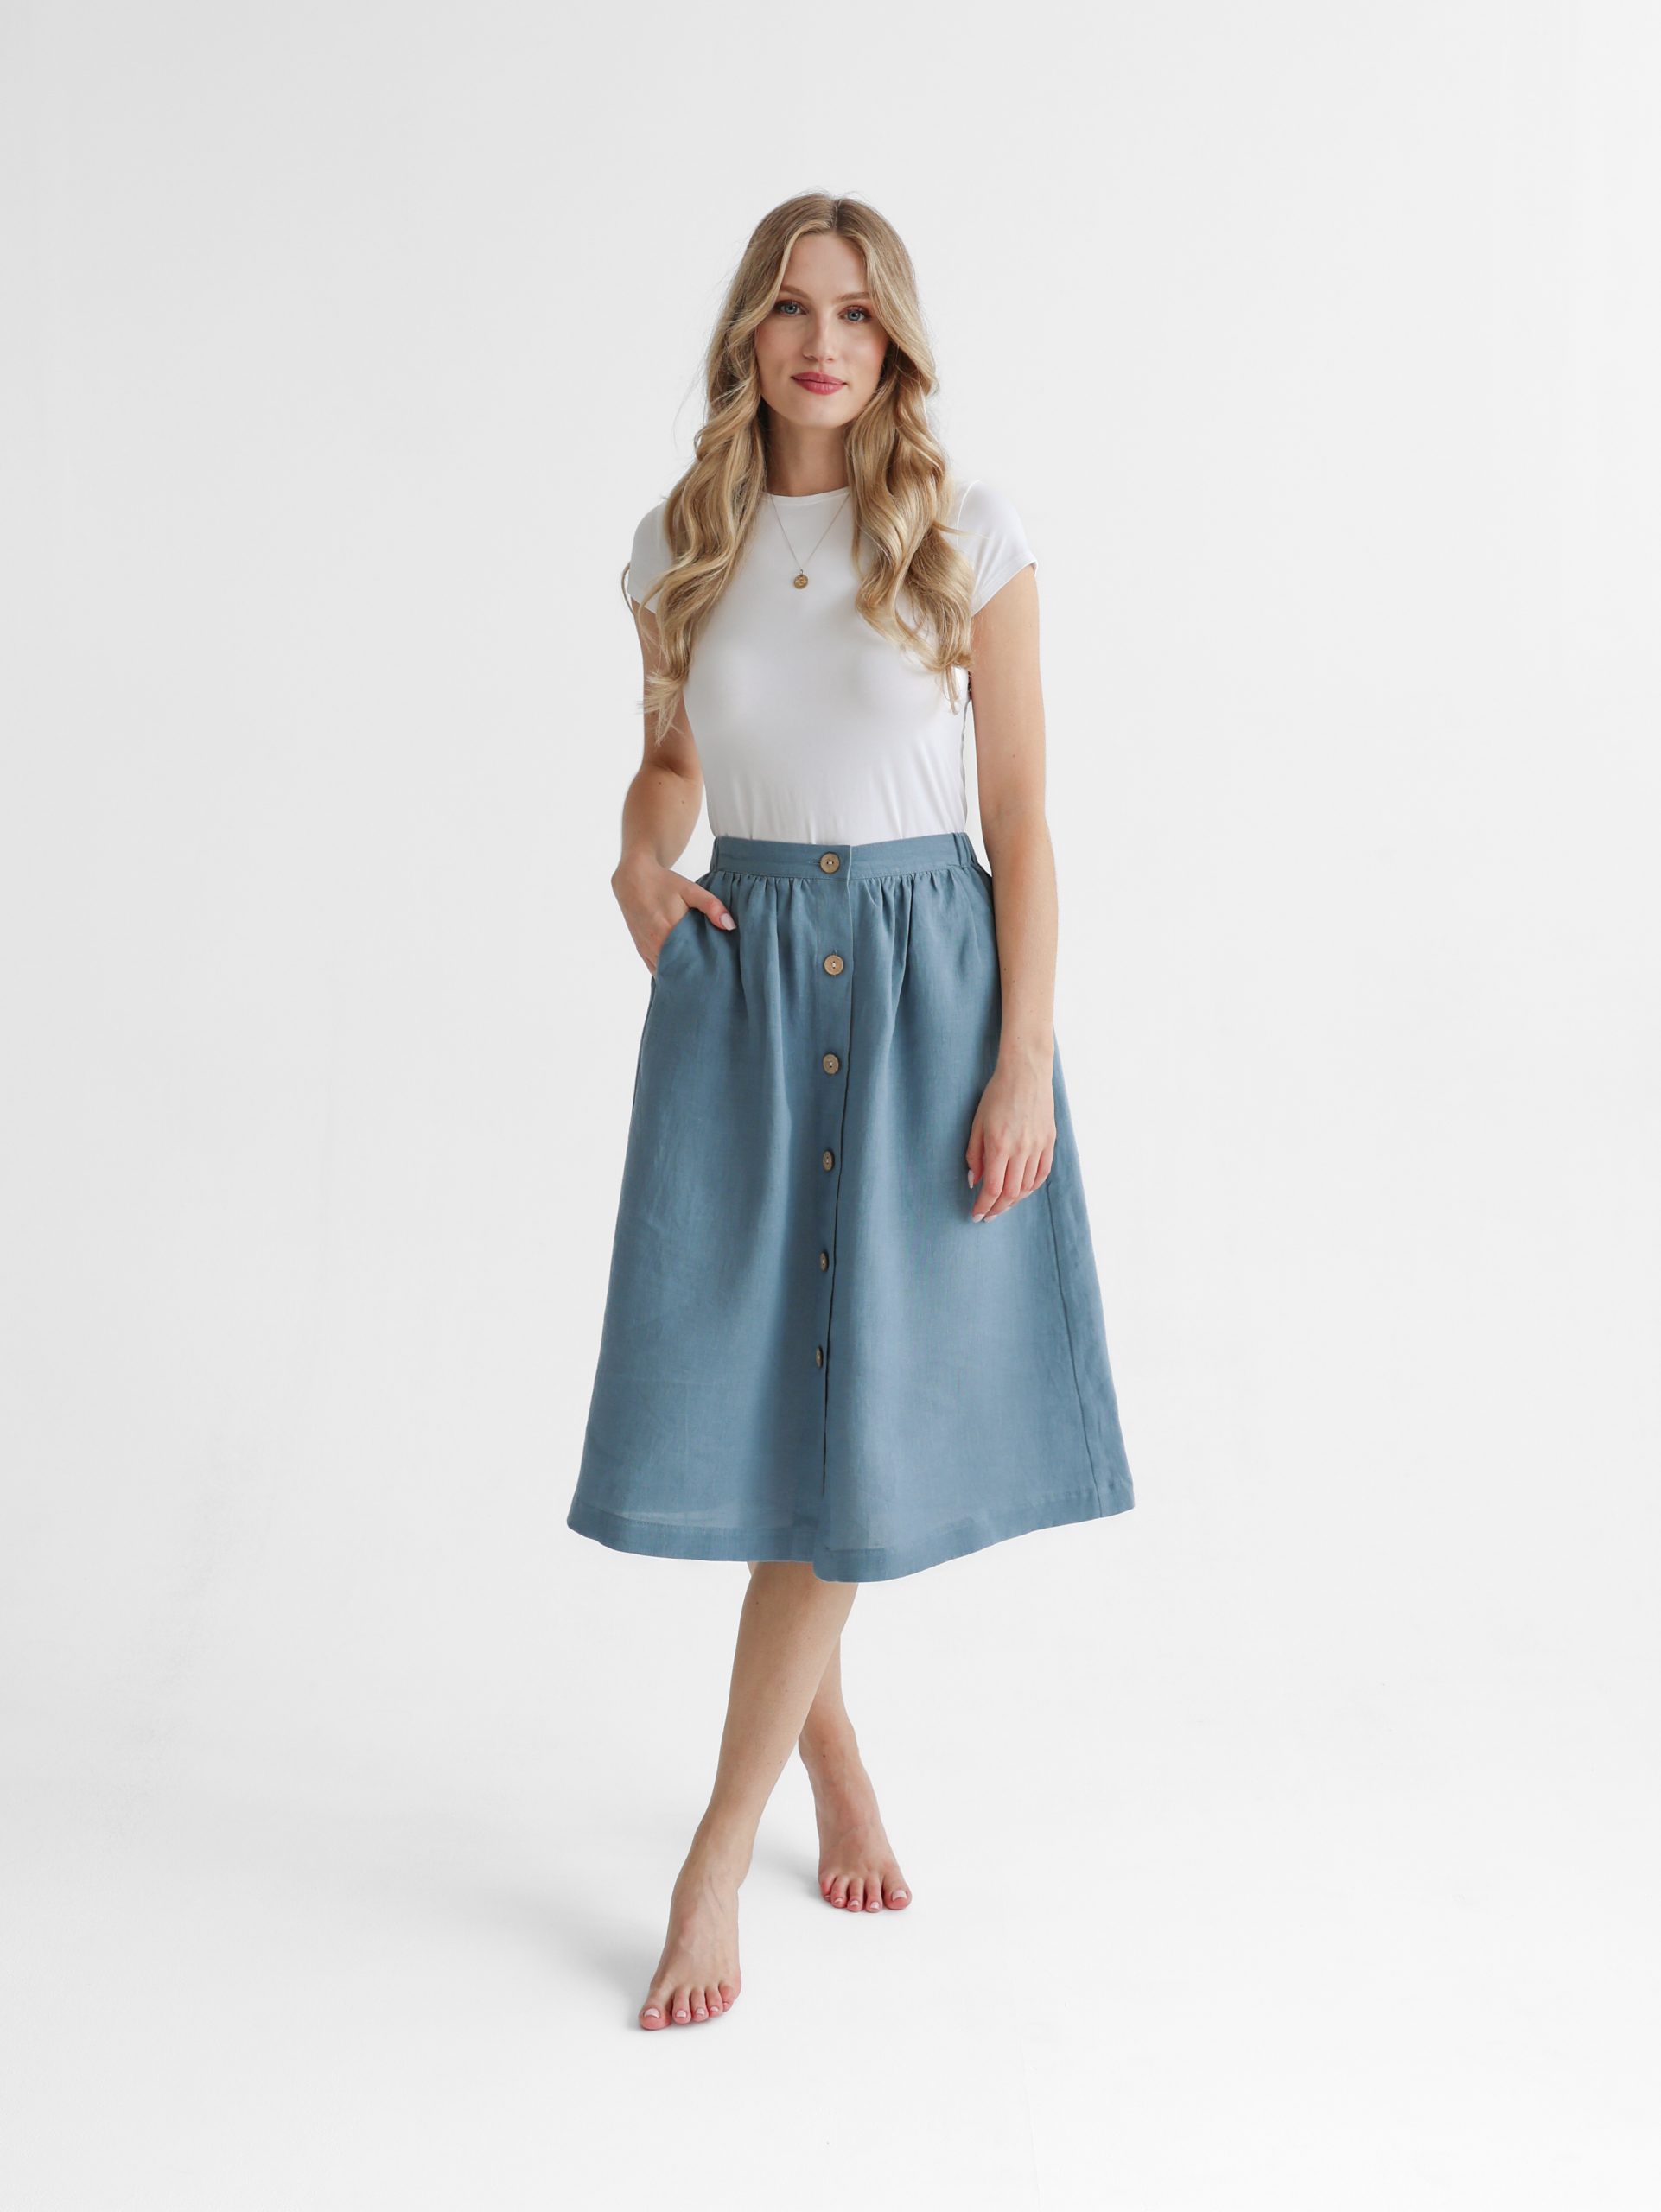 Blue linen skirt